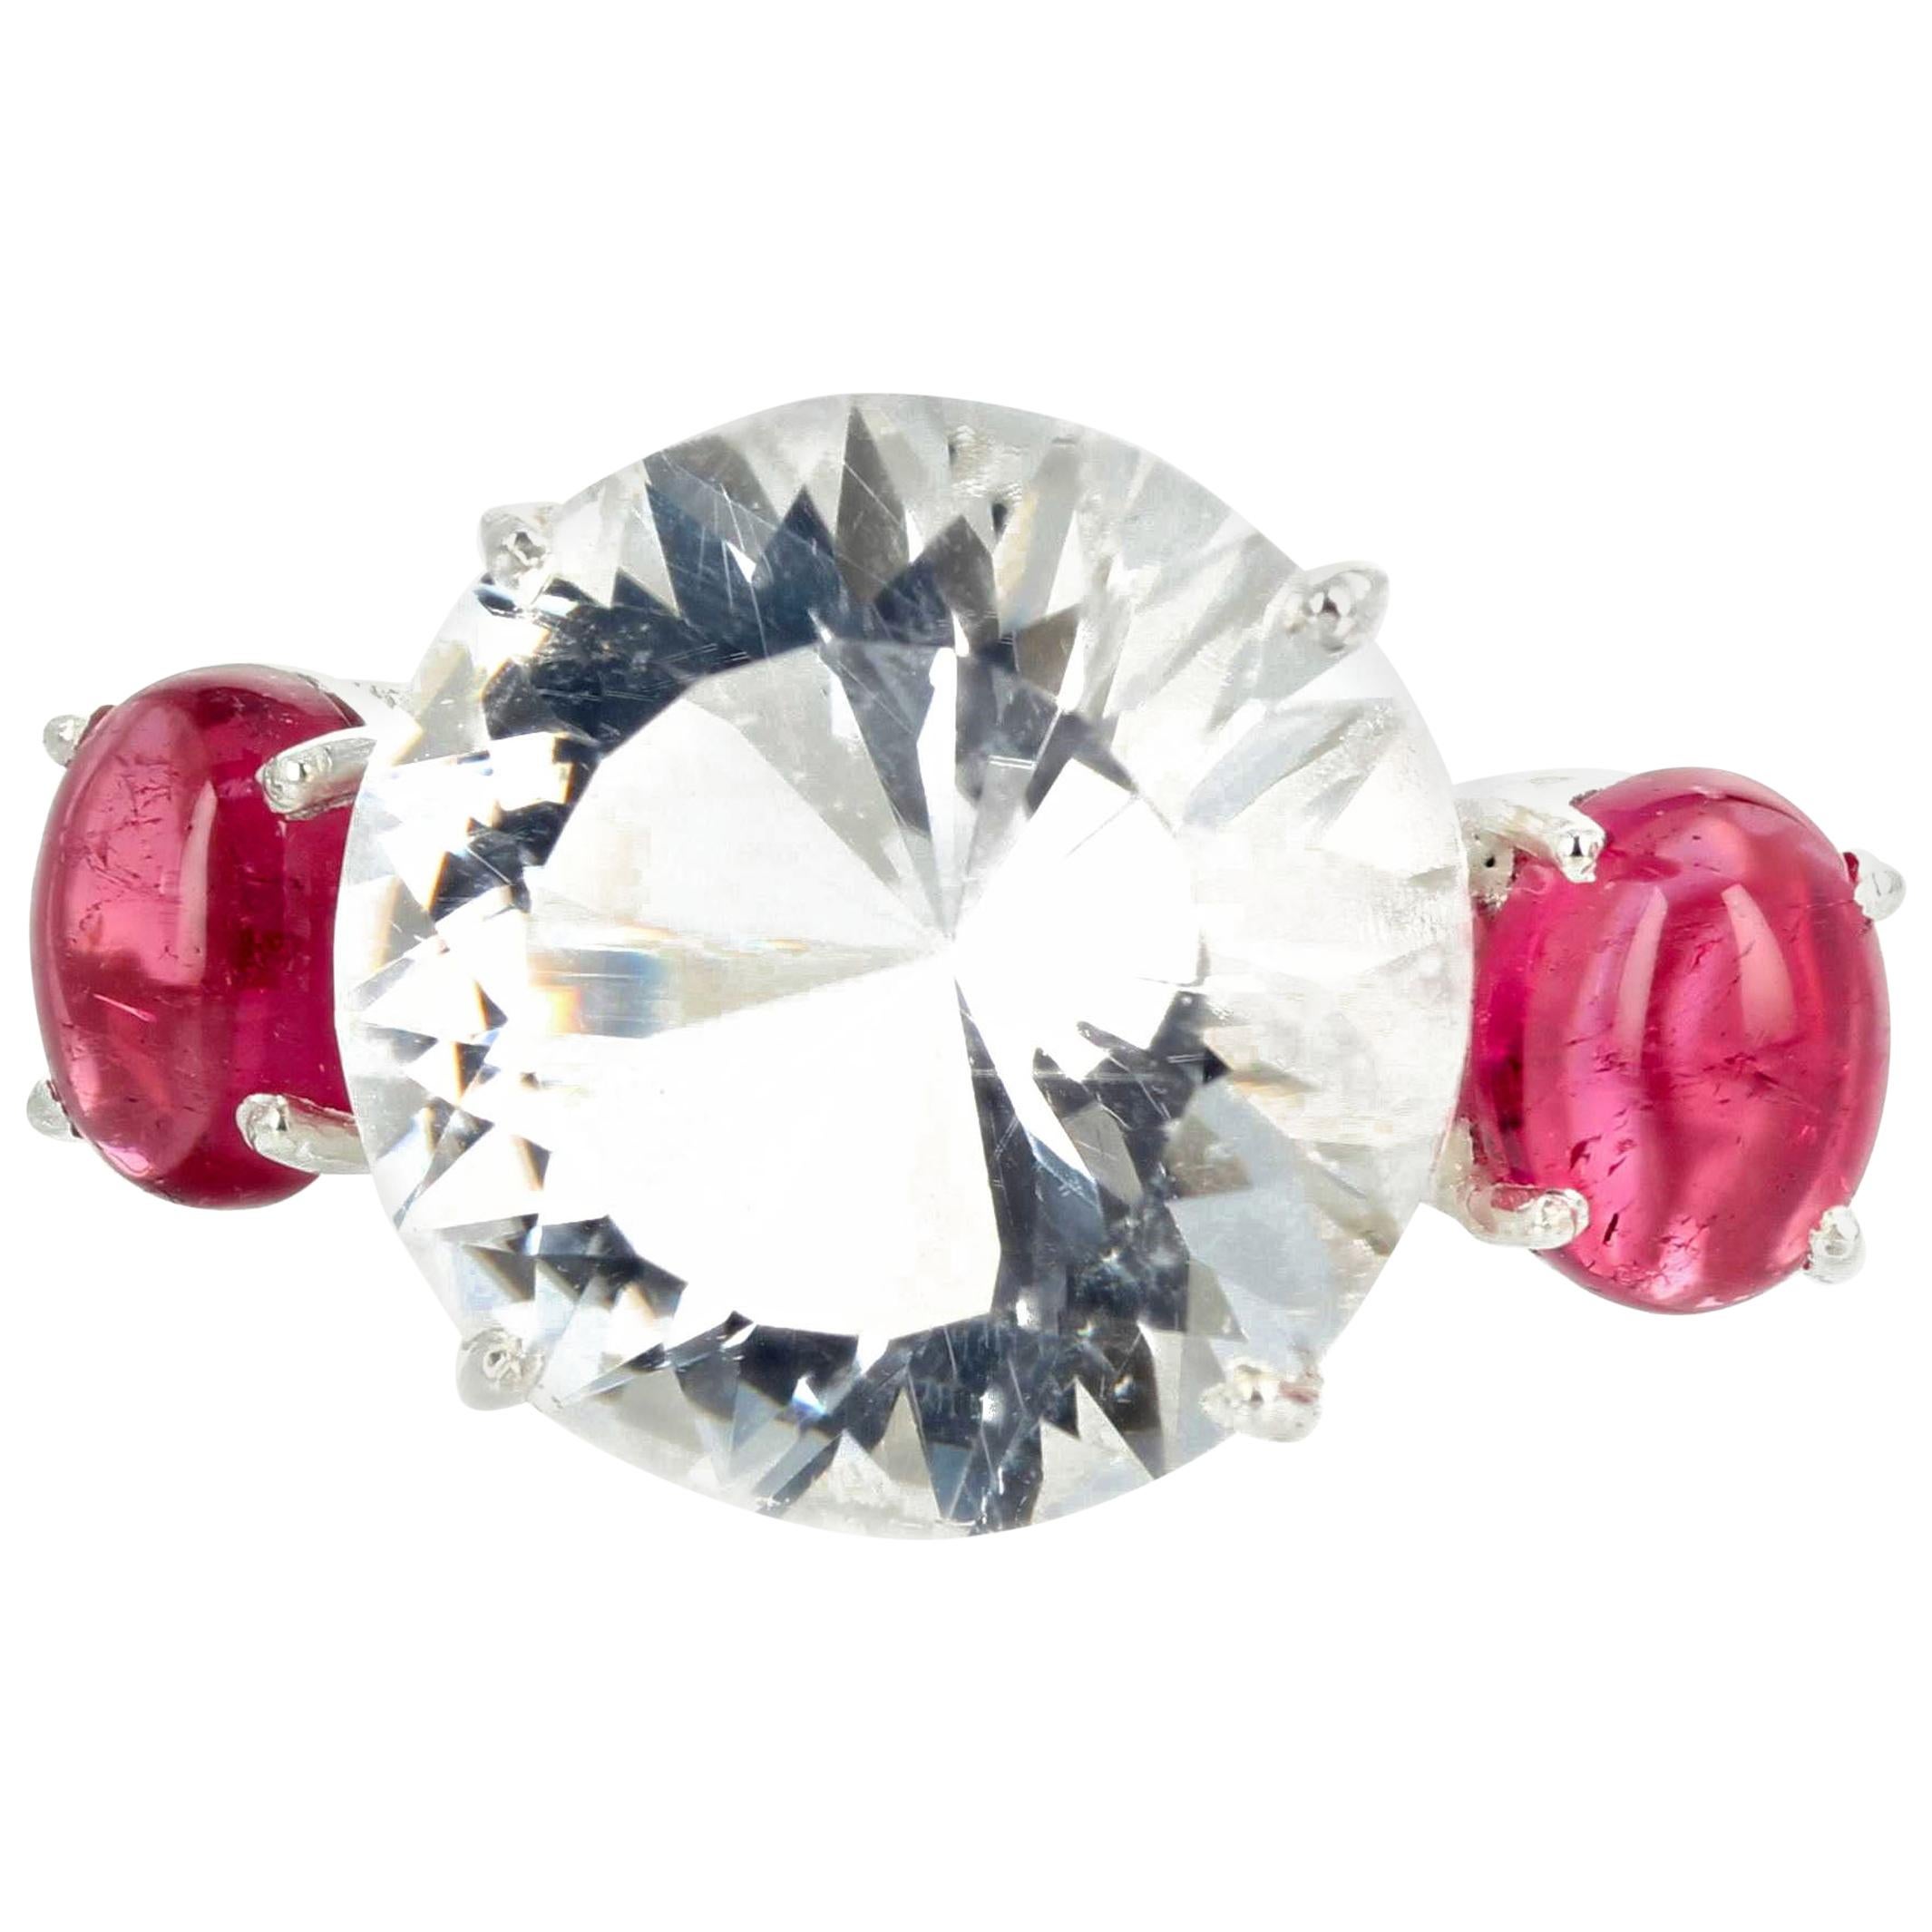 AJD Extraordinarily Brilliant Intense 12.75 Ct Petalite & Pink Tourmaline Ring